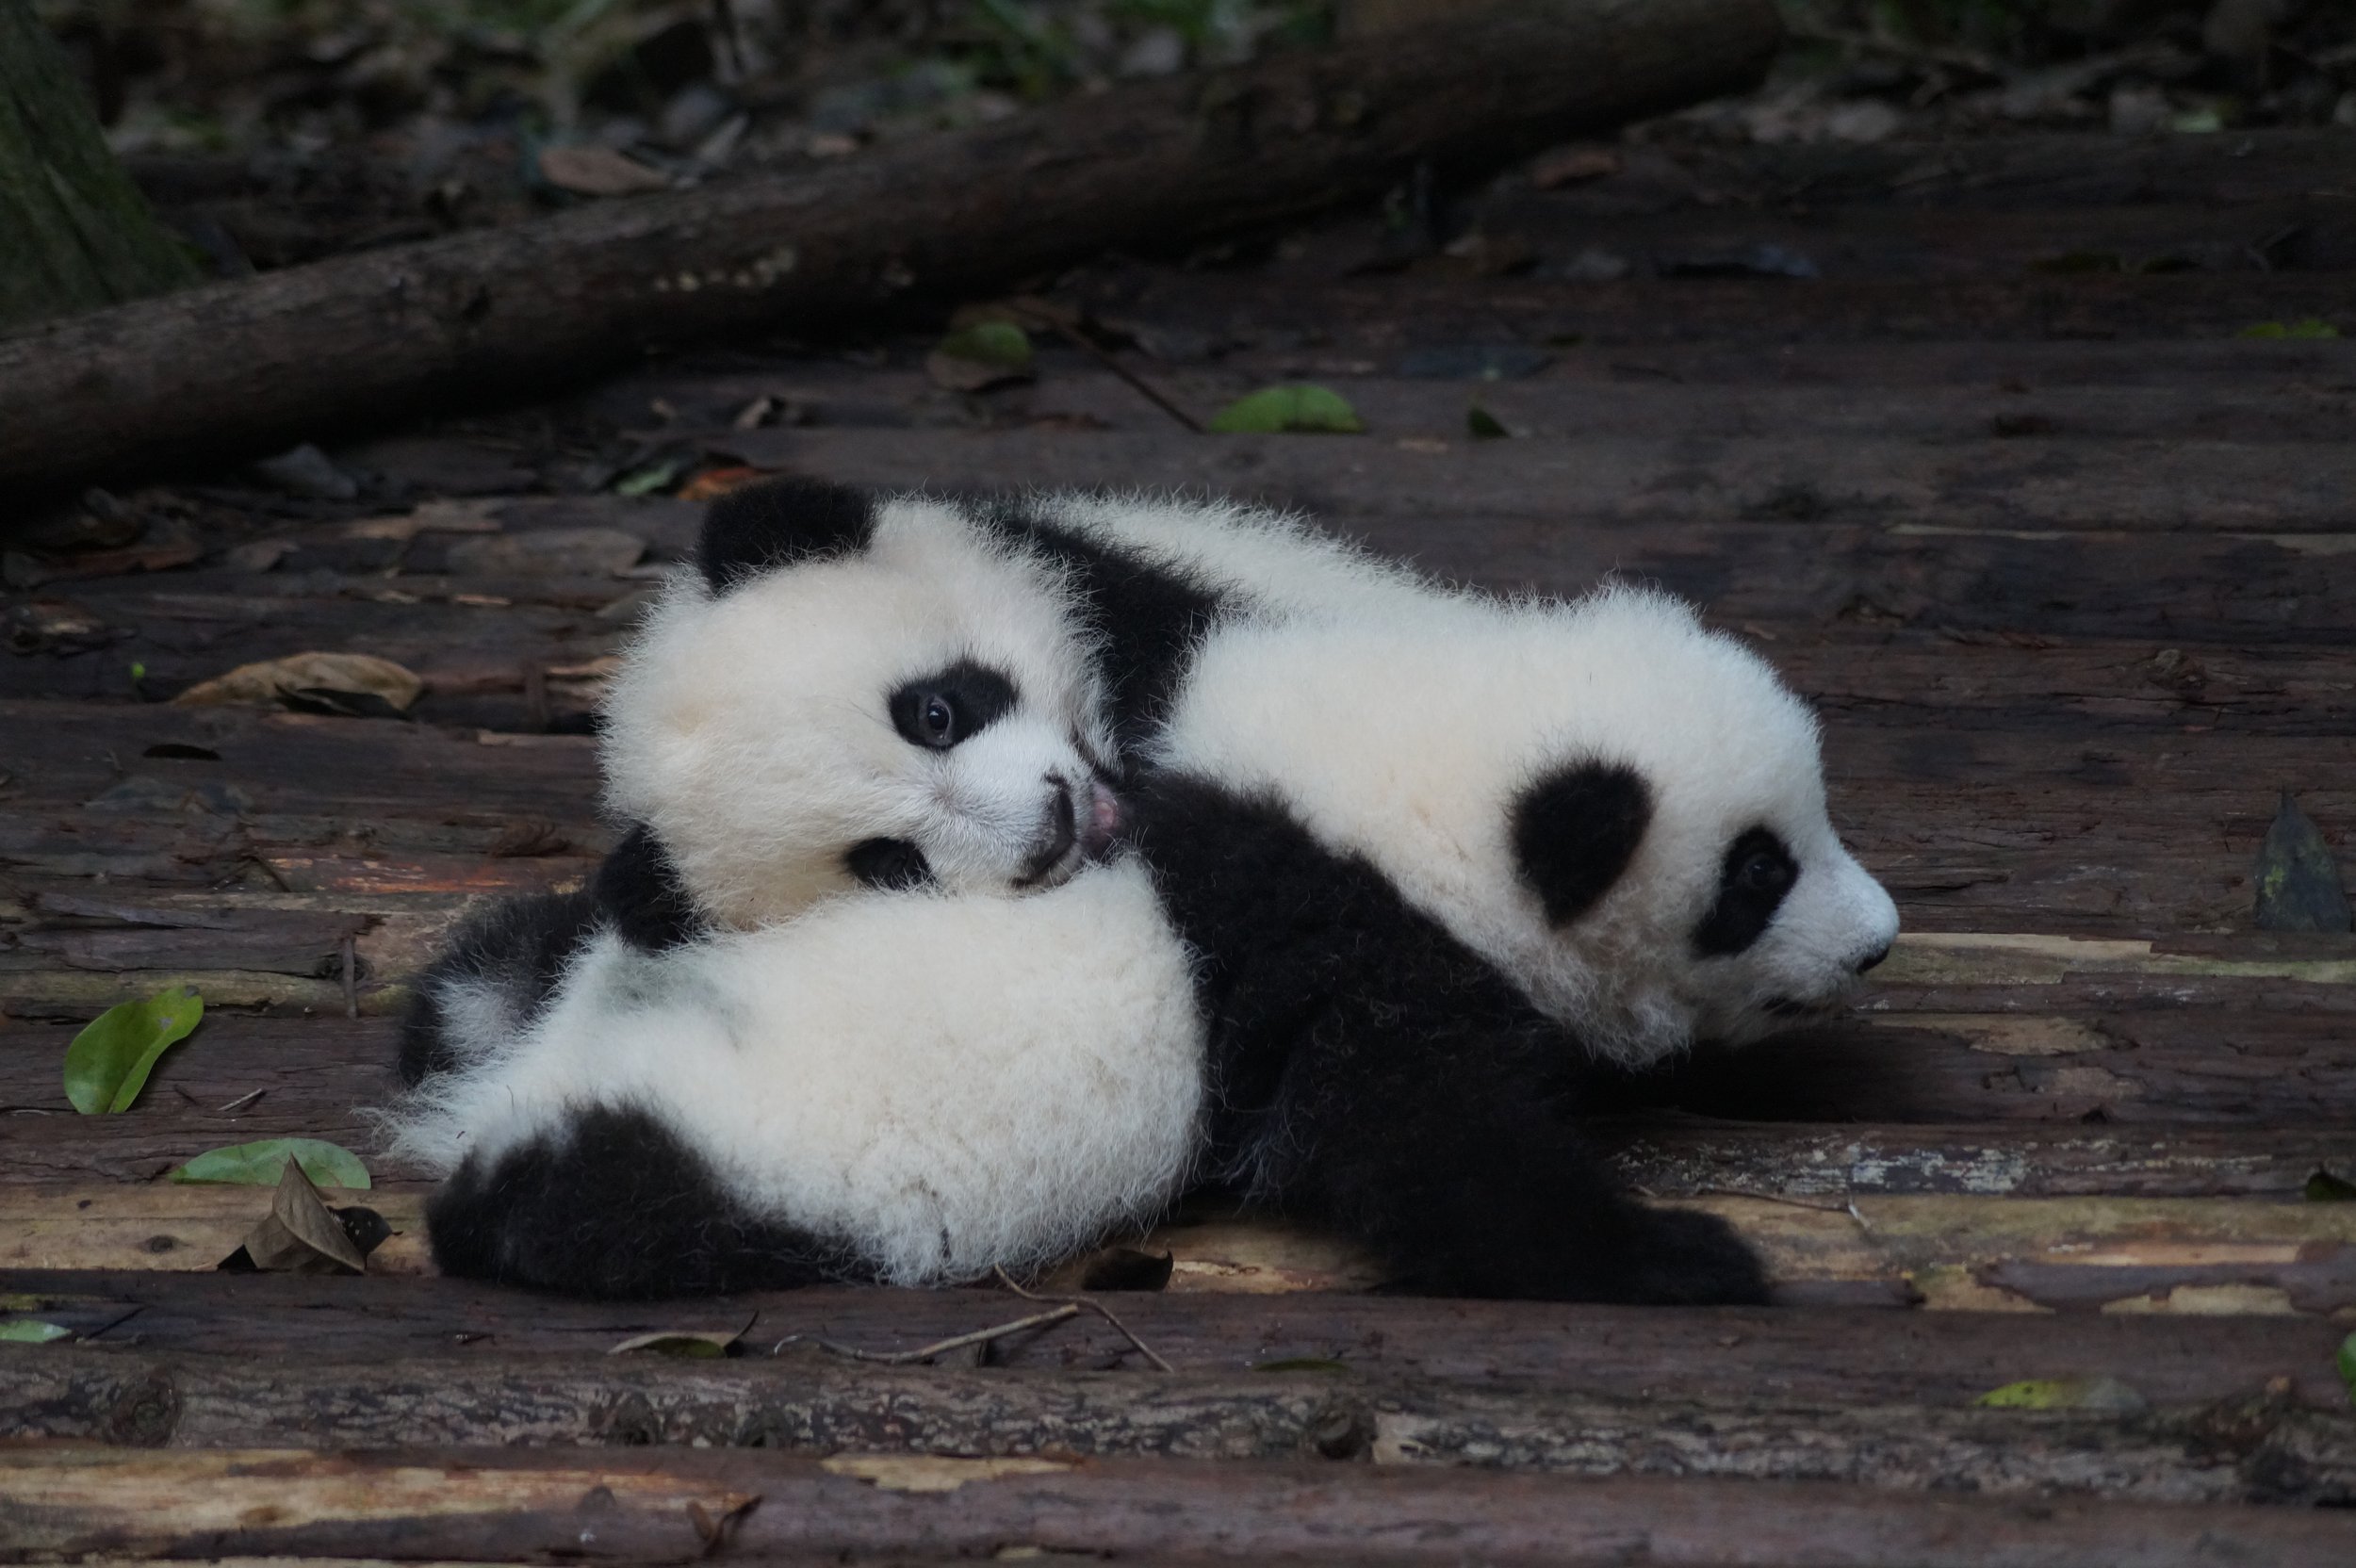 Amid U.S./China 'decoupling' talk, China is recalling pandas from American  zoos.